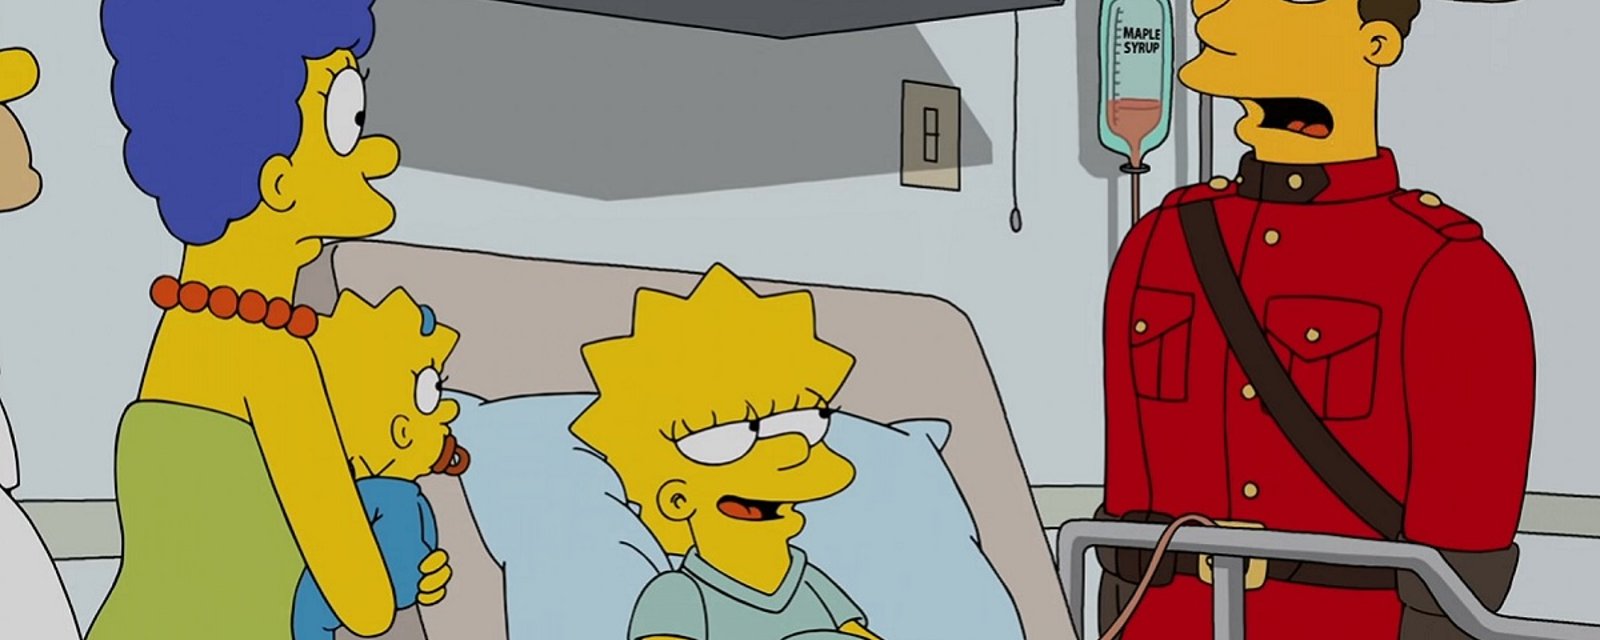 Ottawa Senators humiliated on the latest episode of the Simpsons.